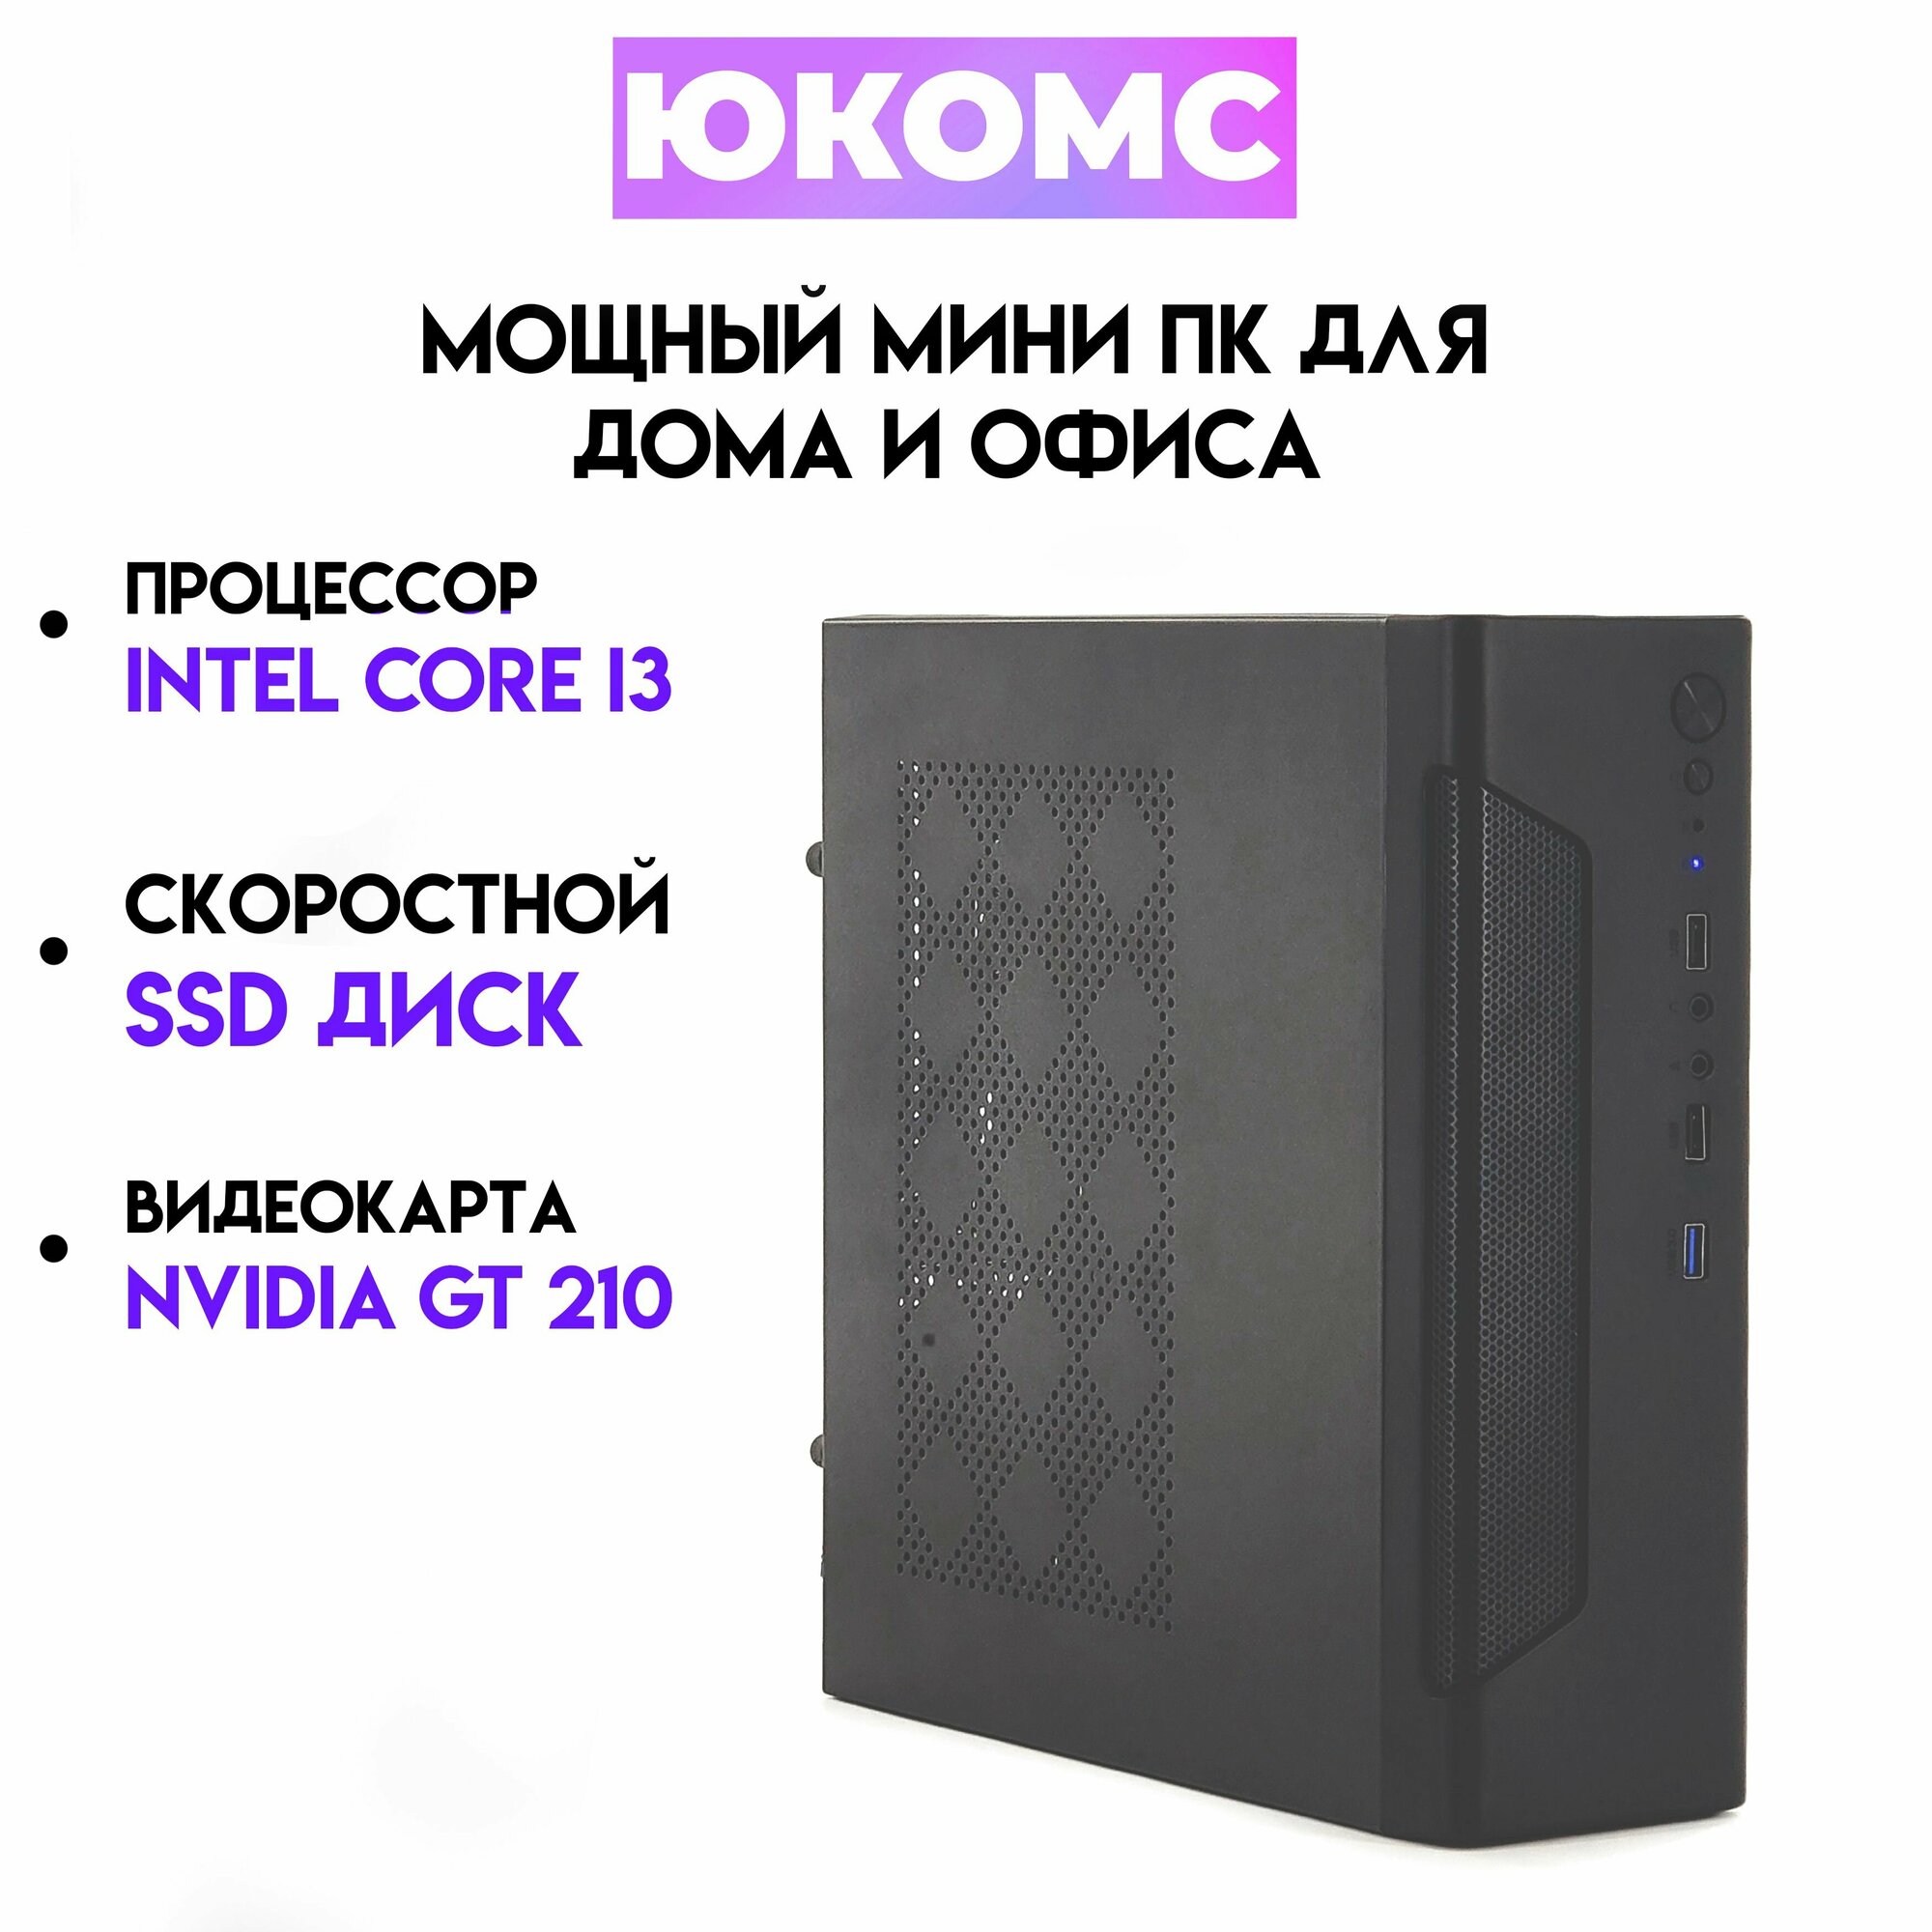 Мини PC юкомс Core I5 2500, GT 210 1GB, SSD 240GB, HDD 1TB, 4gb DDR3, БП 200w, win 10 pro, Exegate mini case